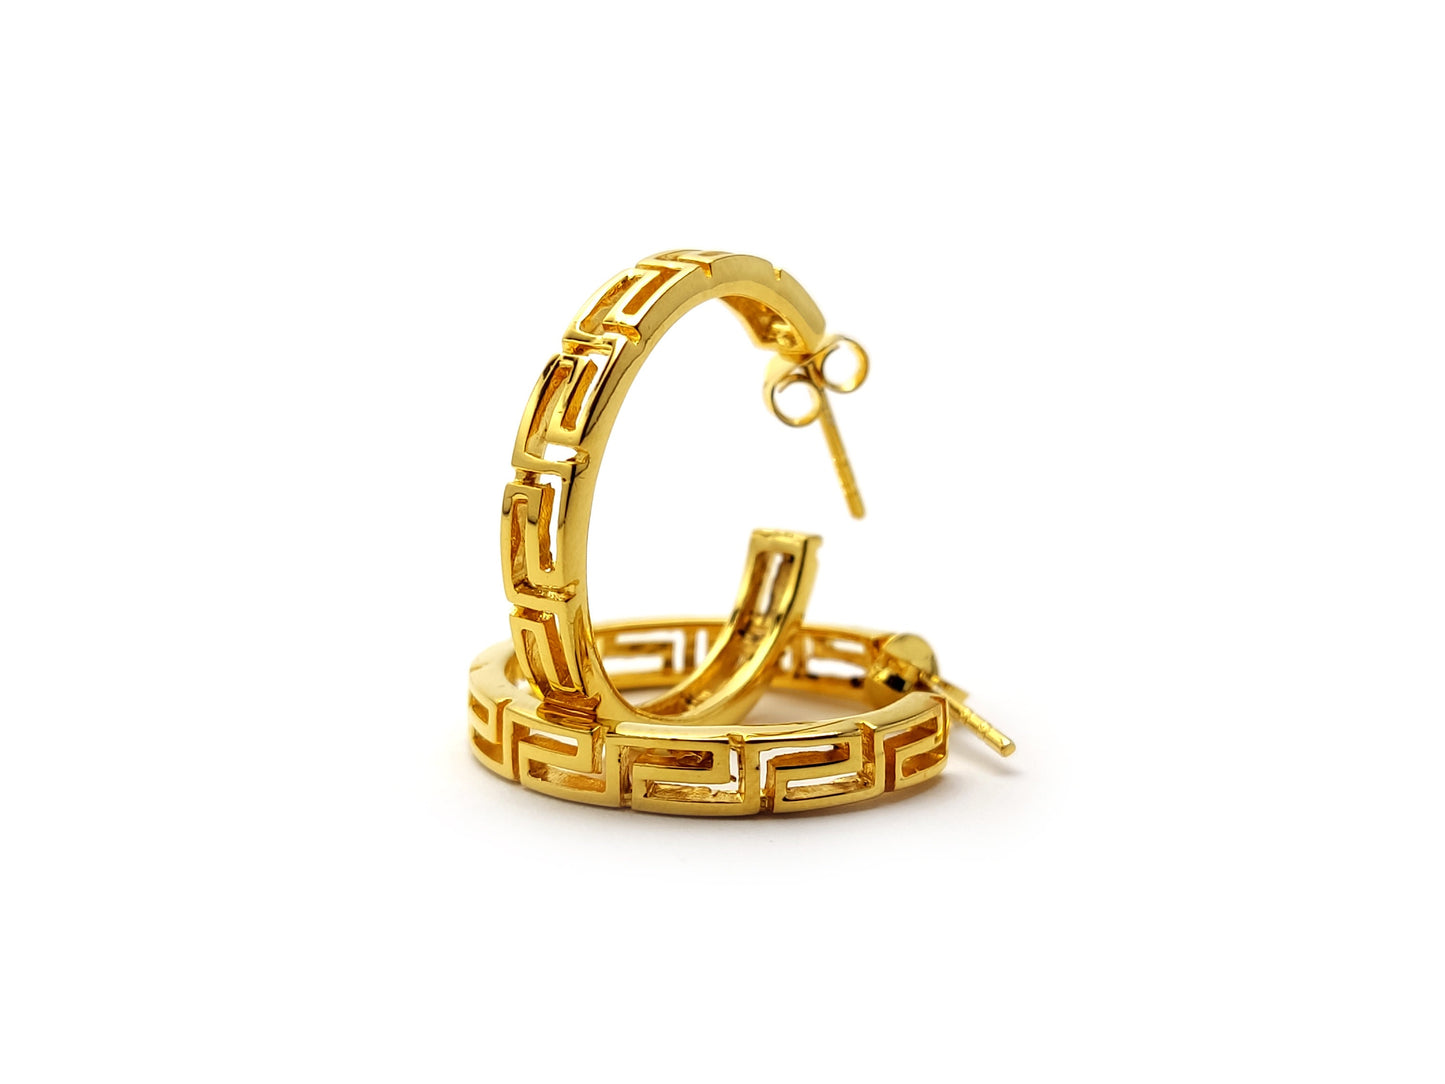 Griechische Ohrringe aus Sterlingsilber 925, griechische Ewigkeitsschlüssel, vergoldete Creolen, 24 mm, griechische Ohrringe, Boucles d'oreilles grecques